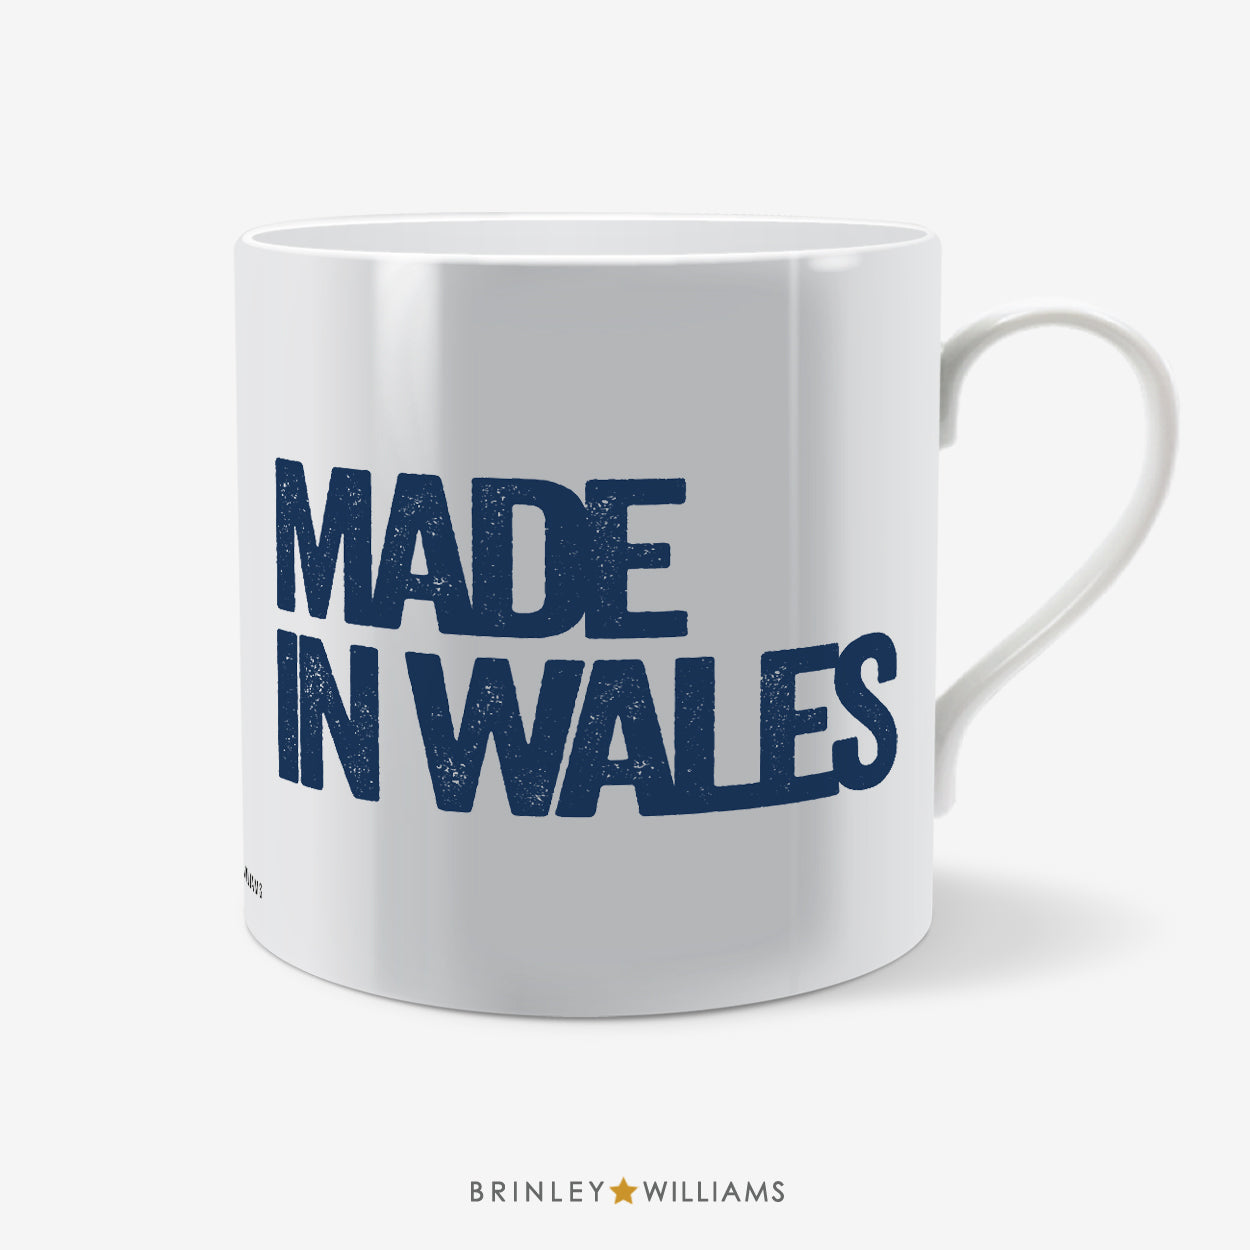 Made in Wales Welsh Mug - Navy